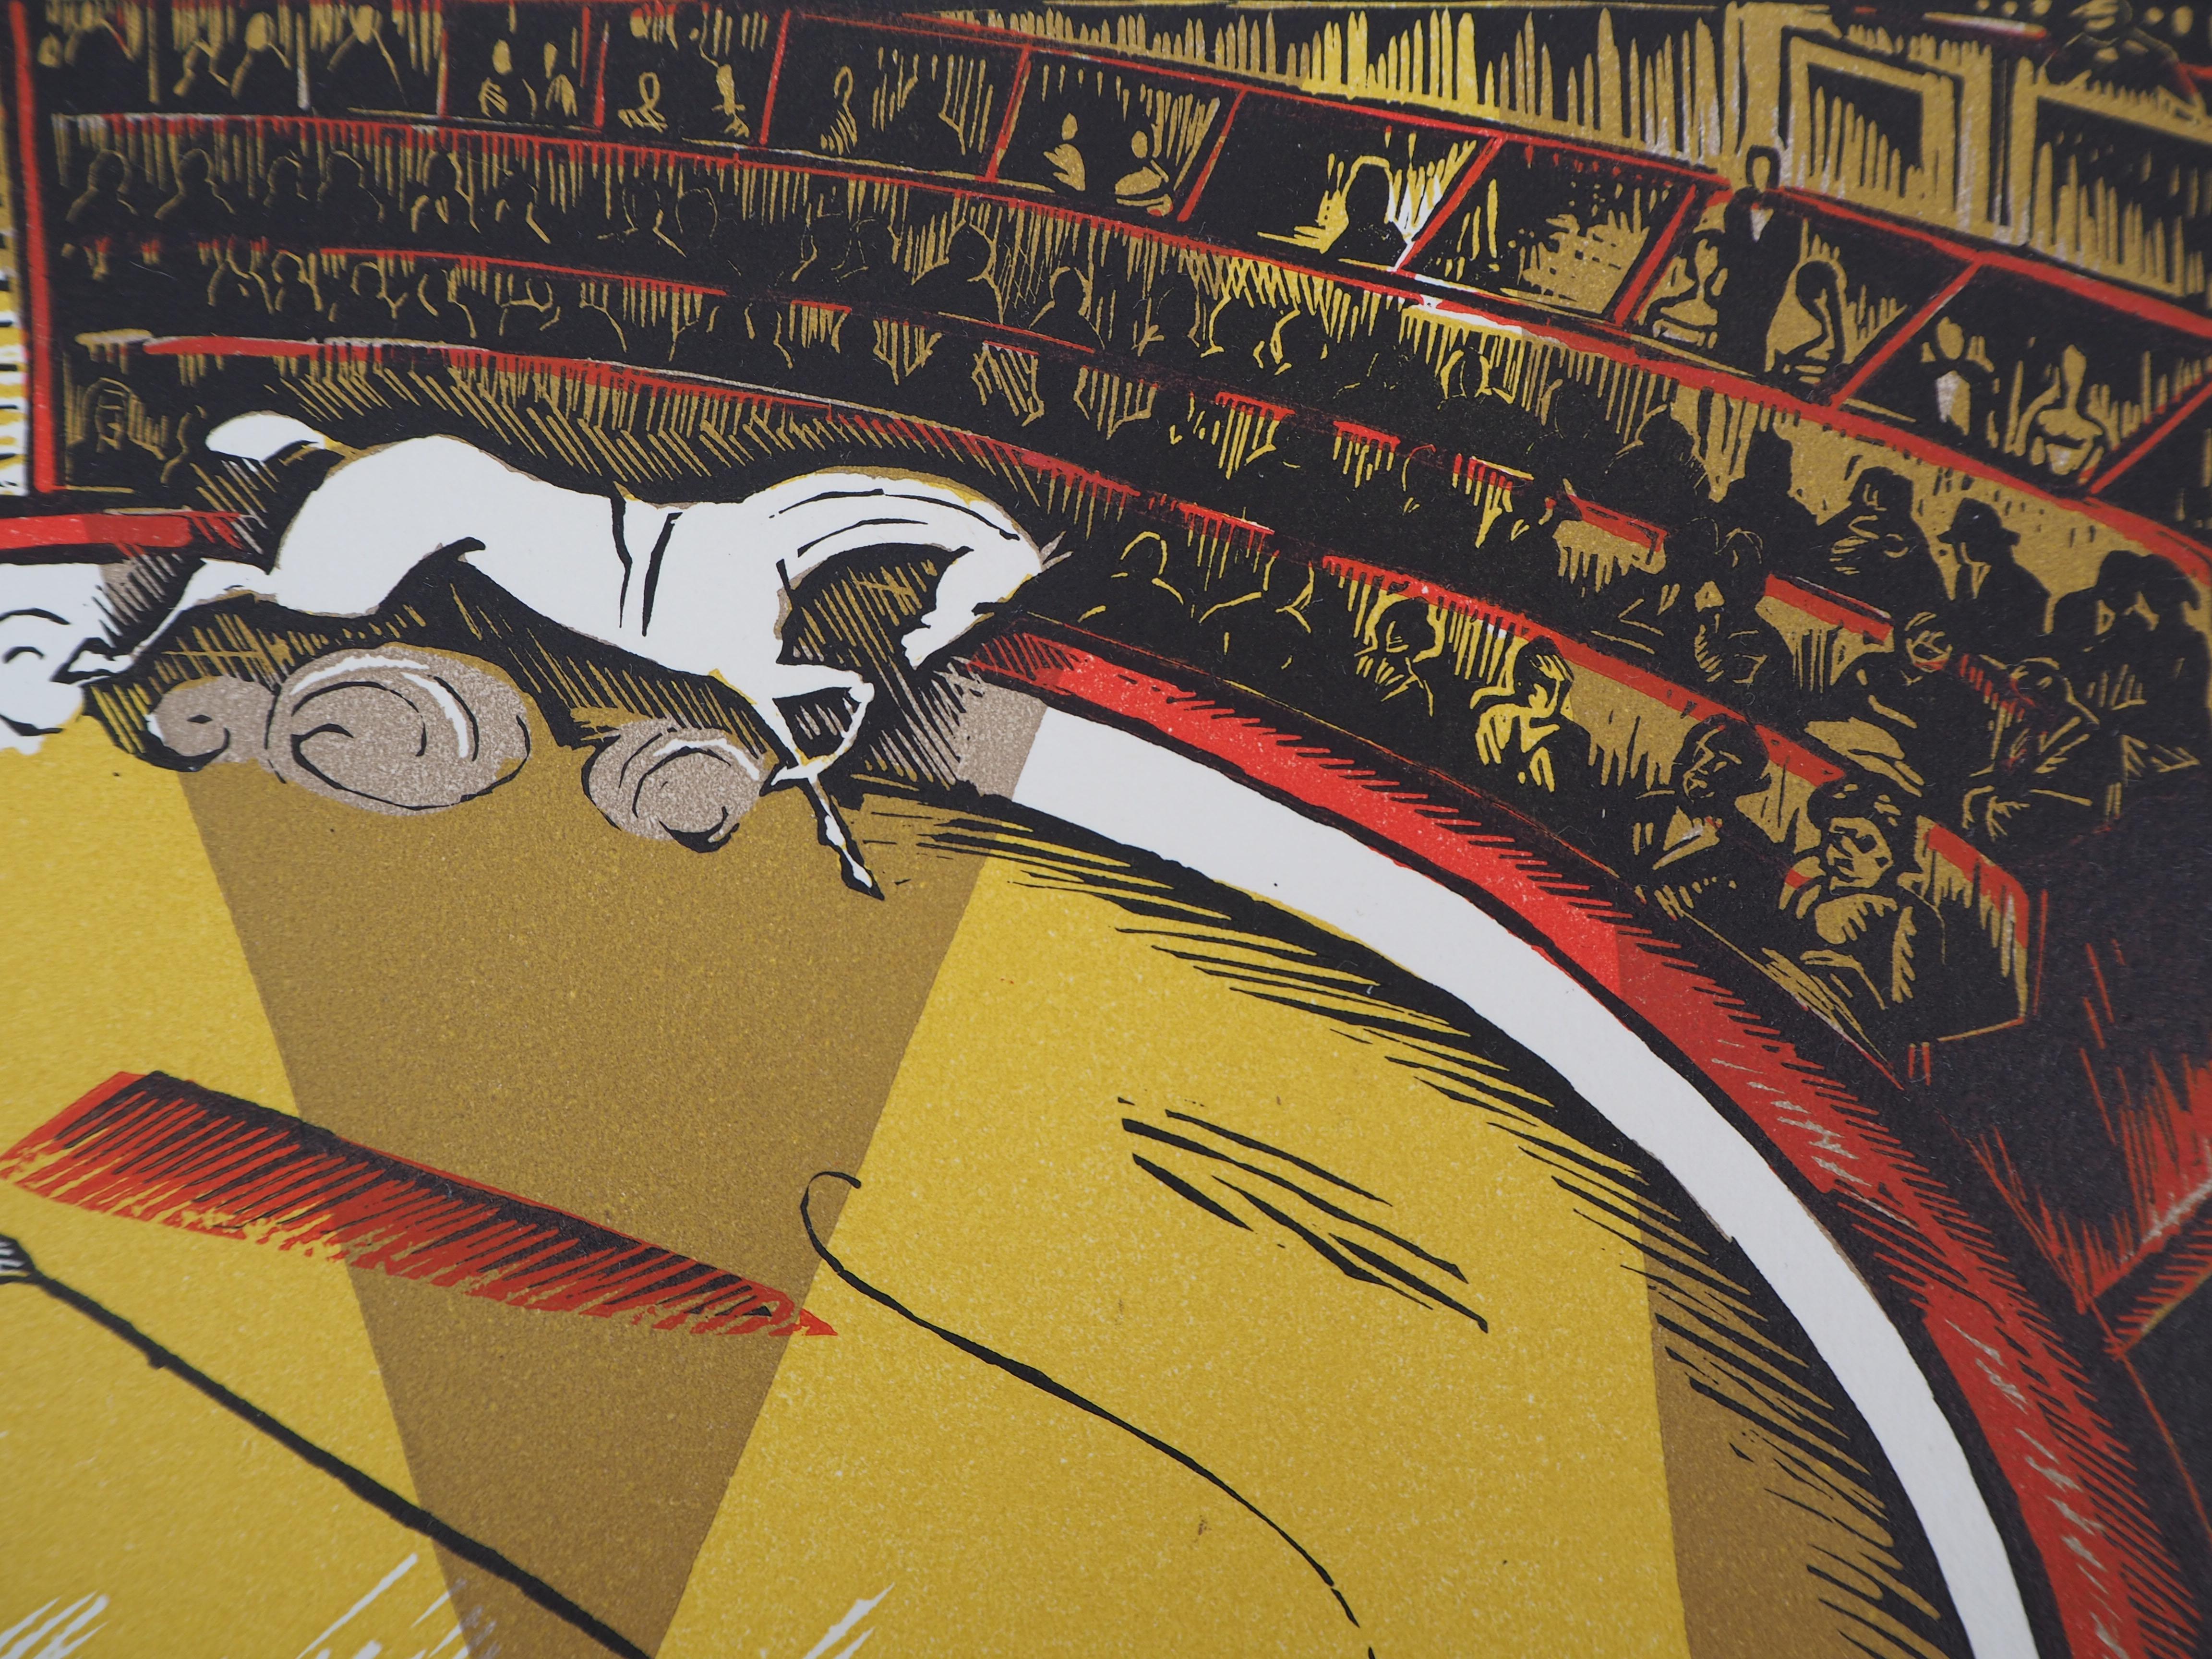 Robert BONFILS
Im Zirkus, 1927

Original Holzschnitt
Handsigniert mit Bleistift
Nummeriert /160
Auf Pergament 32,5 x 25,5 cm (ca. 13 x 10 Zoll)
Trägt den Blindstempel des Herausgebers 'Imagier de la Gravure sur Bois' (Lugt 1140a)

Ausgezeichneter